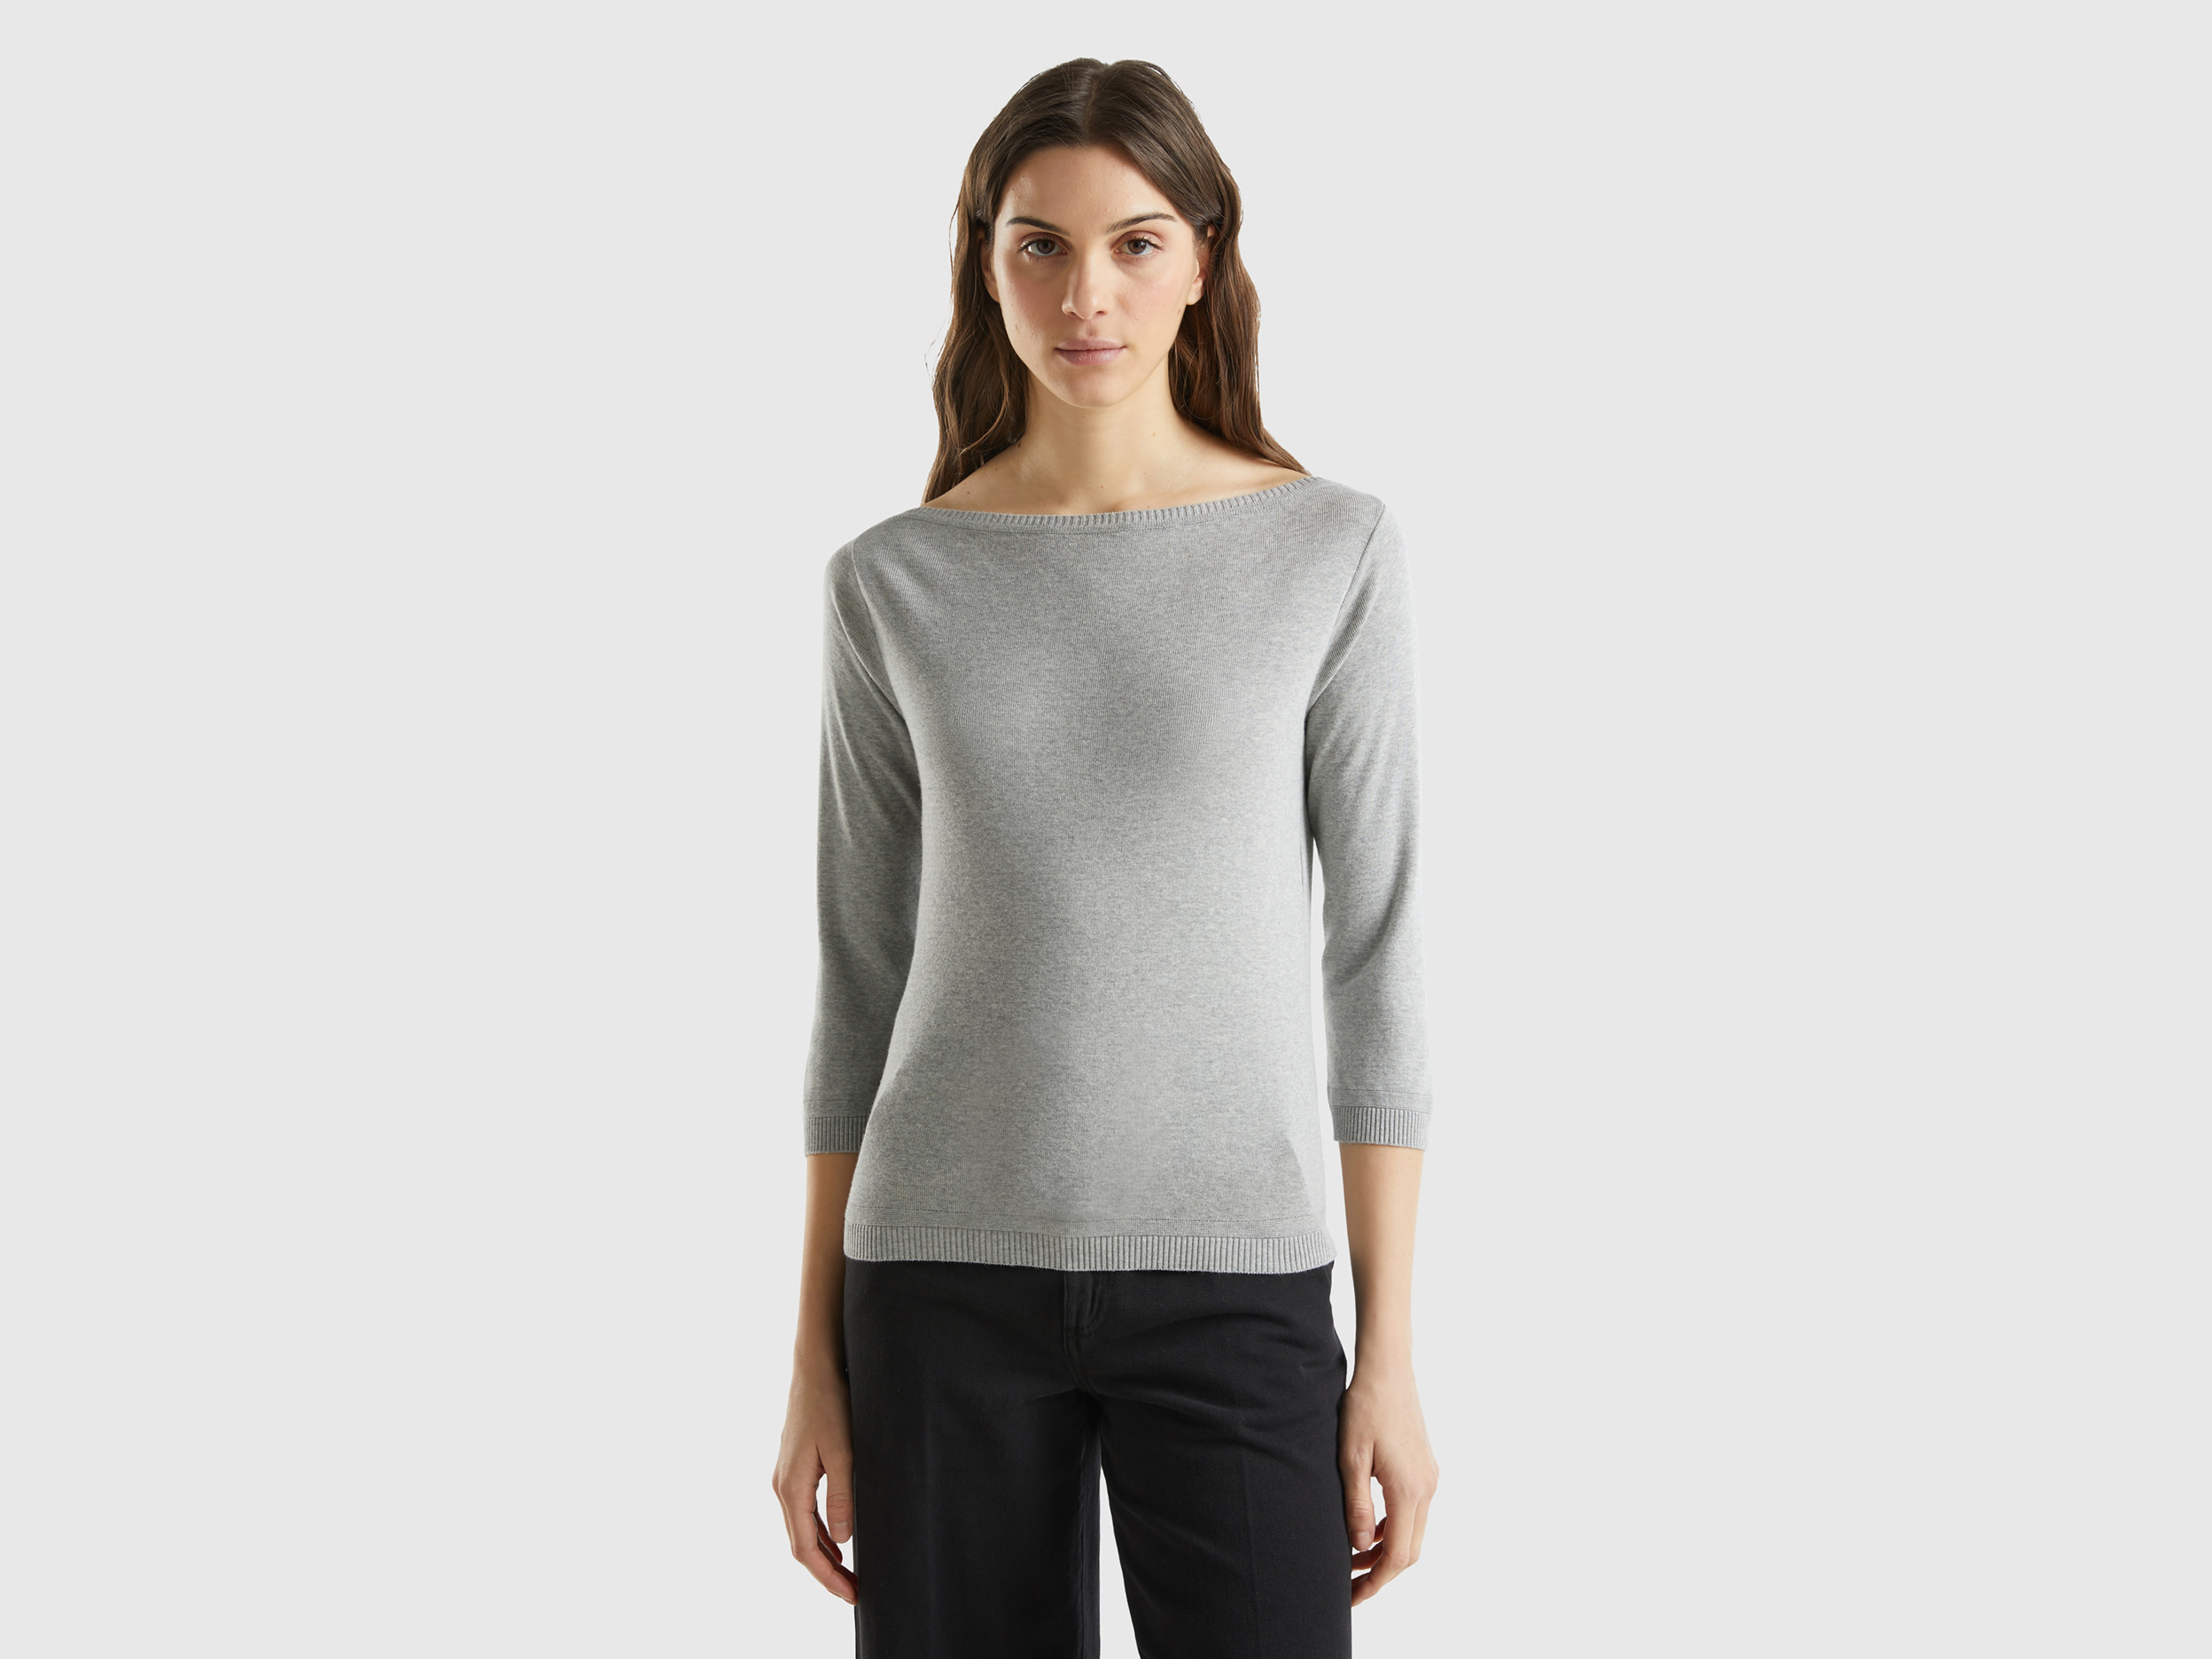 Benetton Online exclusive, 100% Cotton Boat Neck Sweater, size M, Light Gray, Women